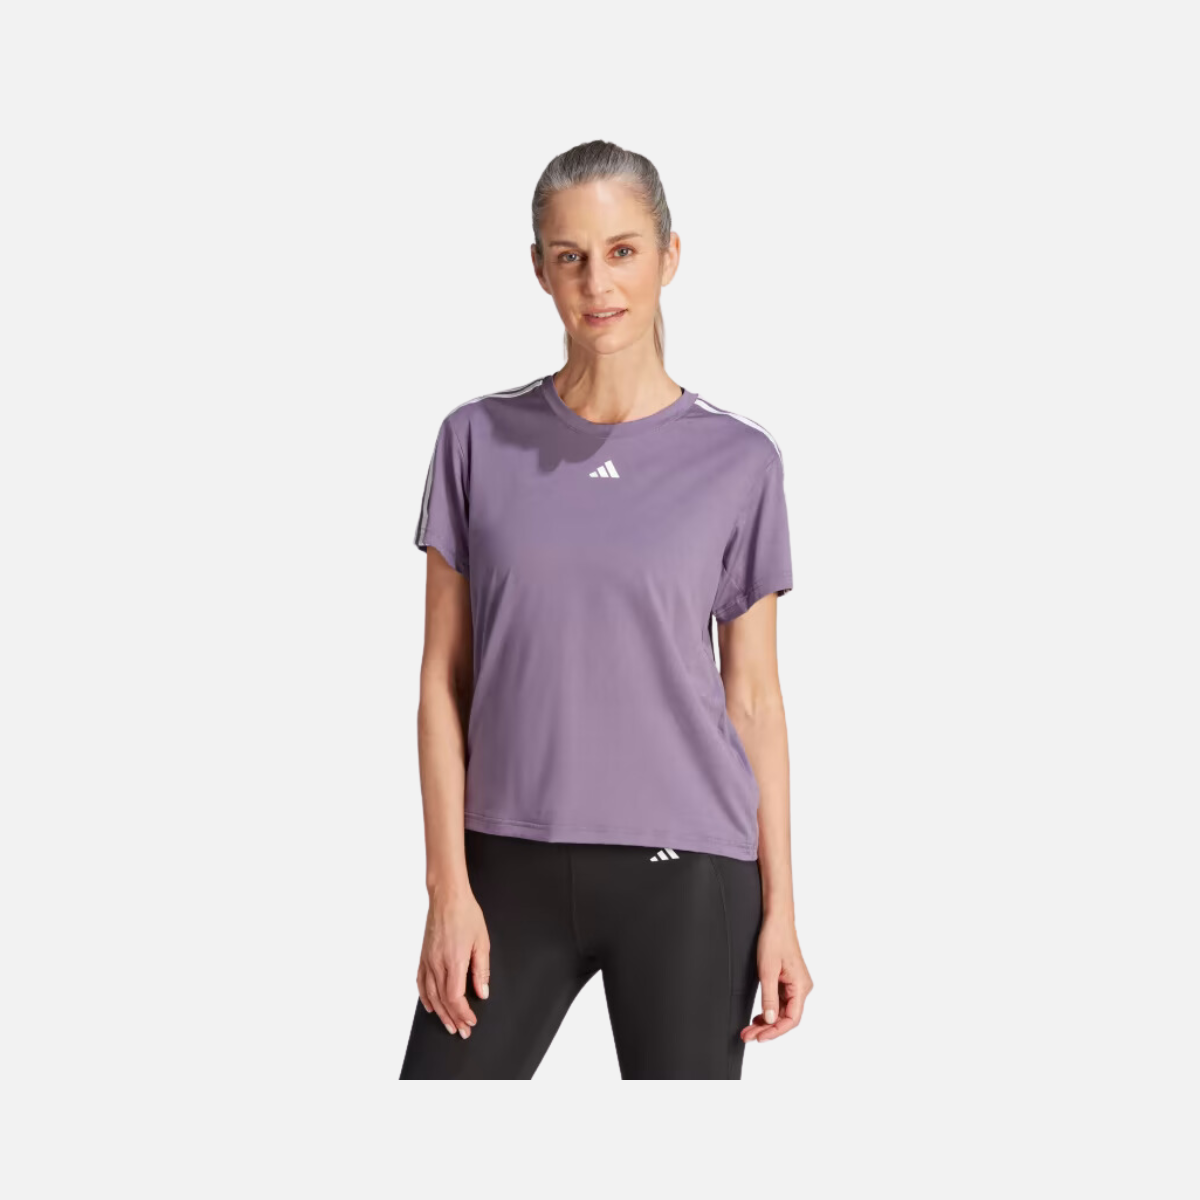 Adidas Aeroready Train Essentials 3 Stripes Women's Training T-shirt -Shadow Violet / White